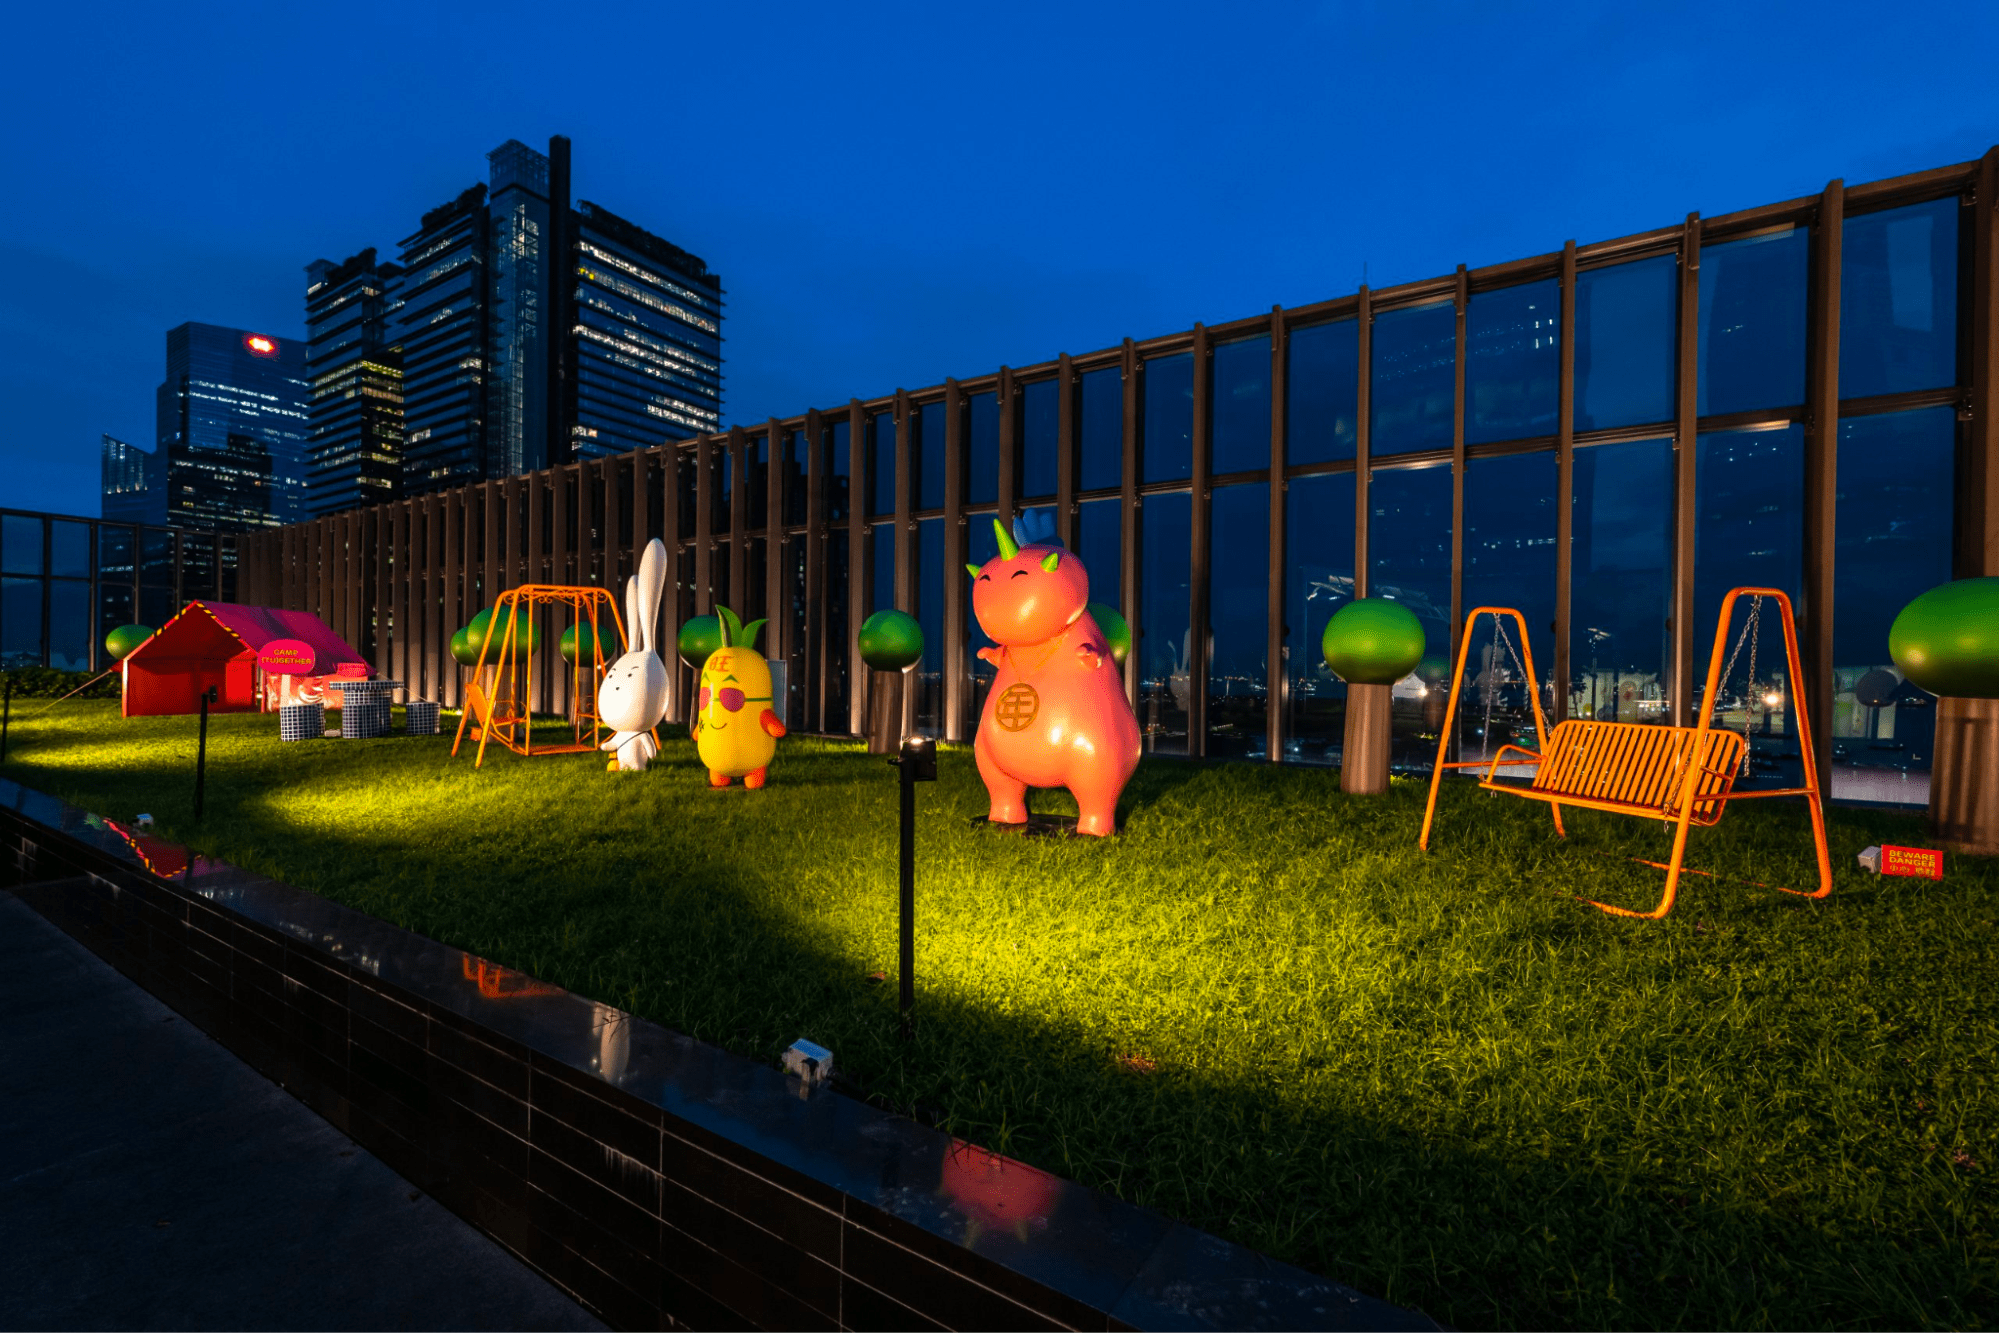 Rabbit themed art installation